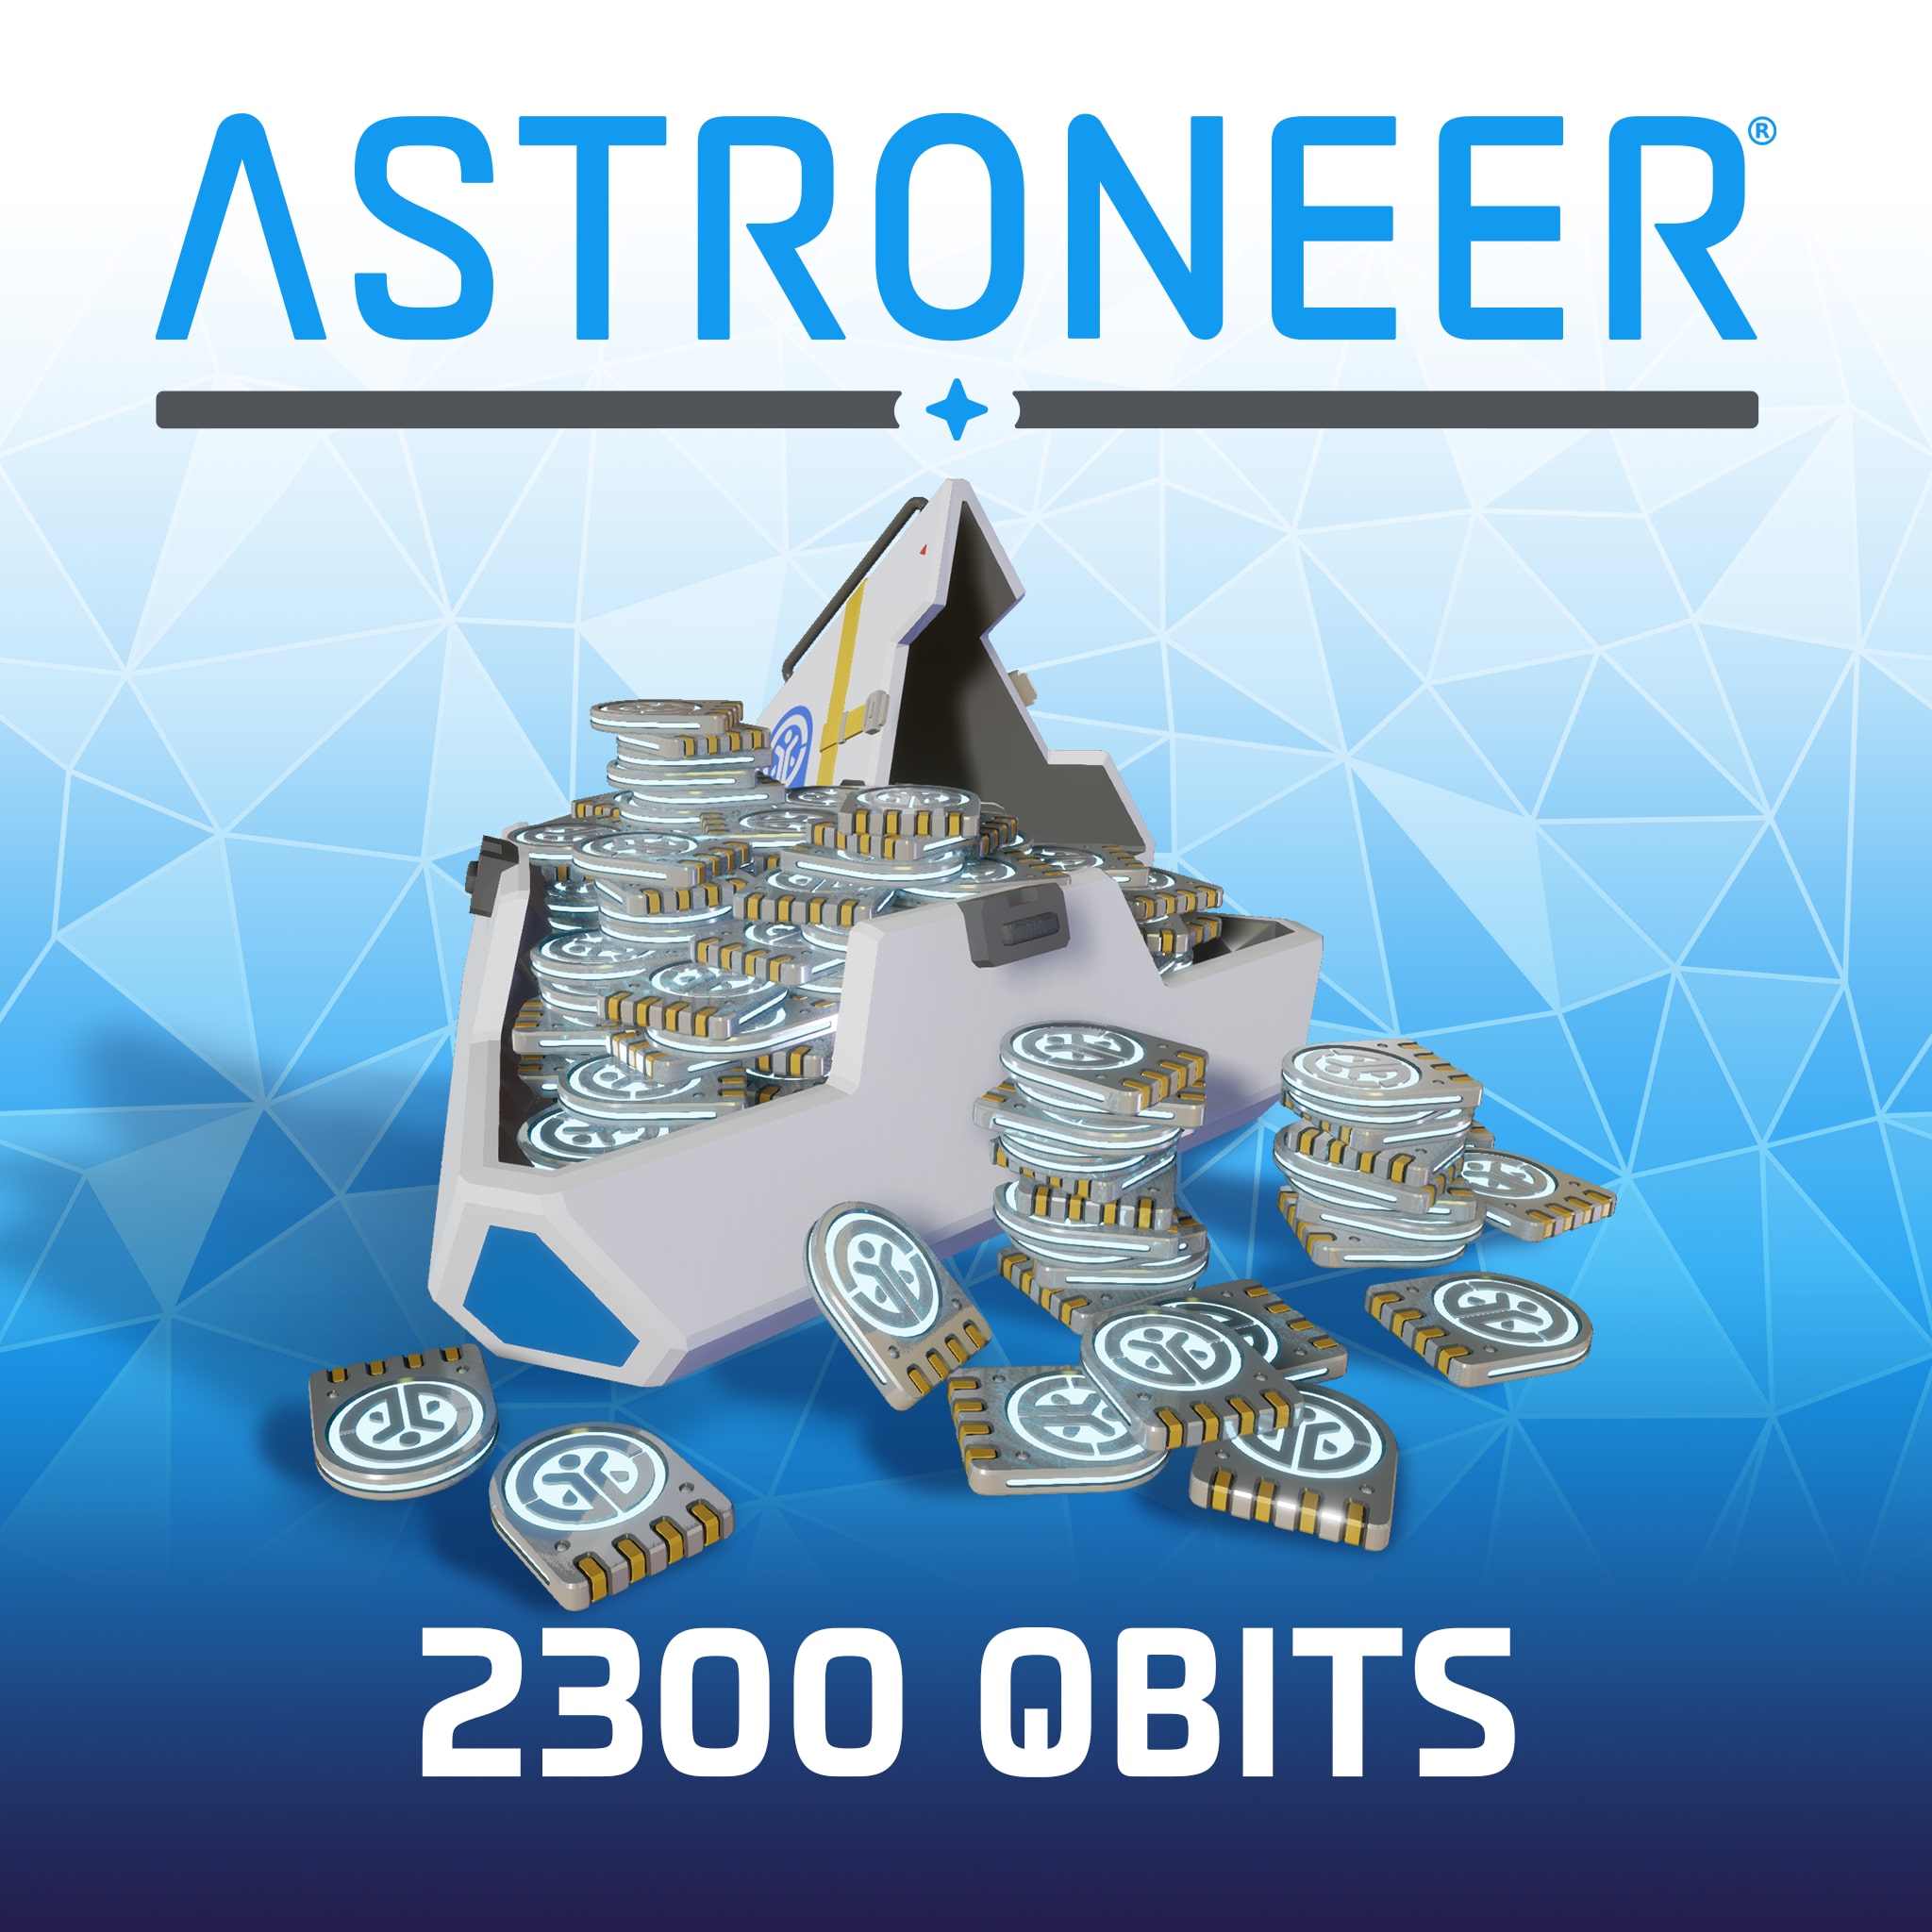 Astroneer - 2300 QBITS